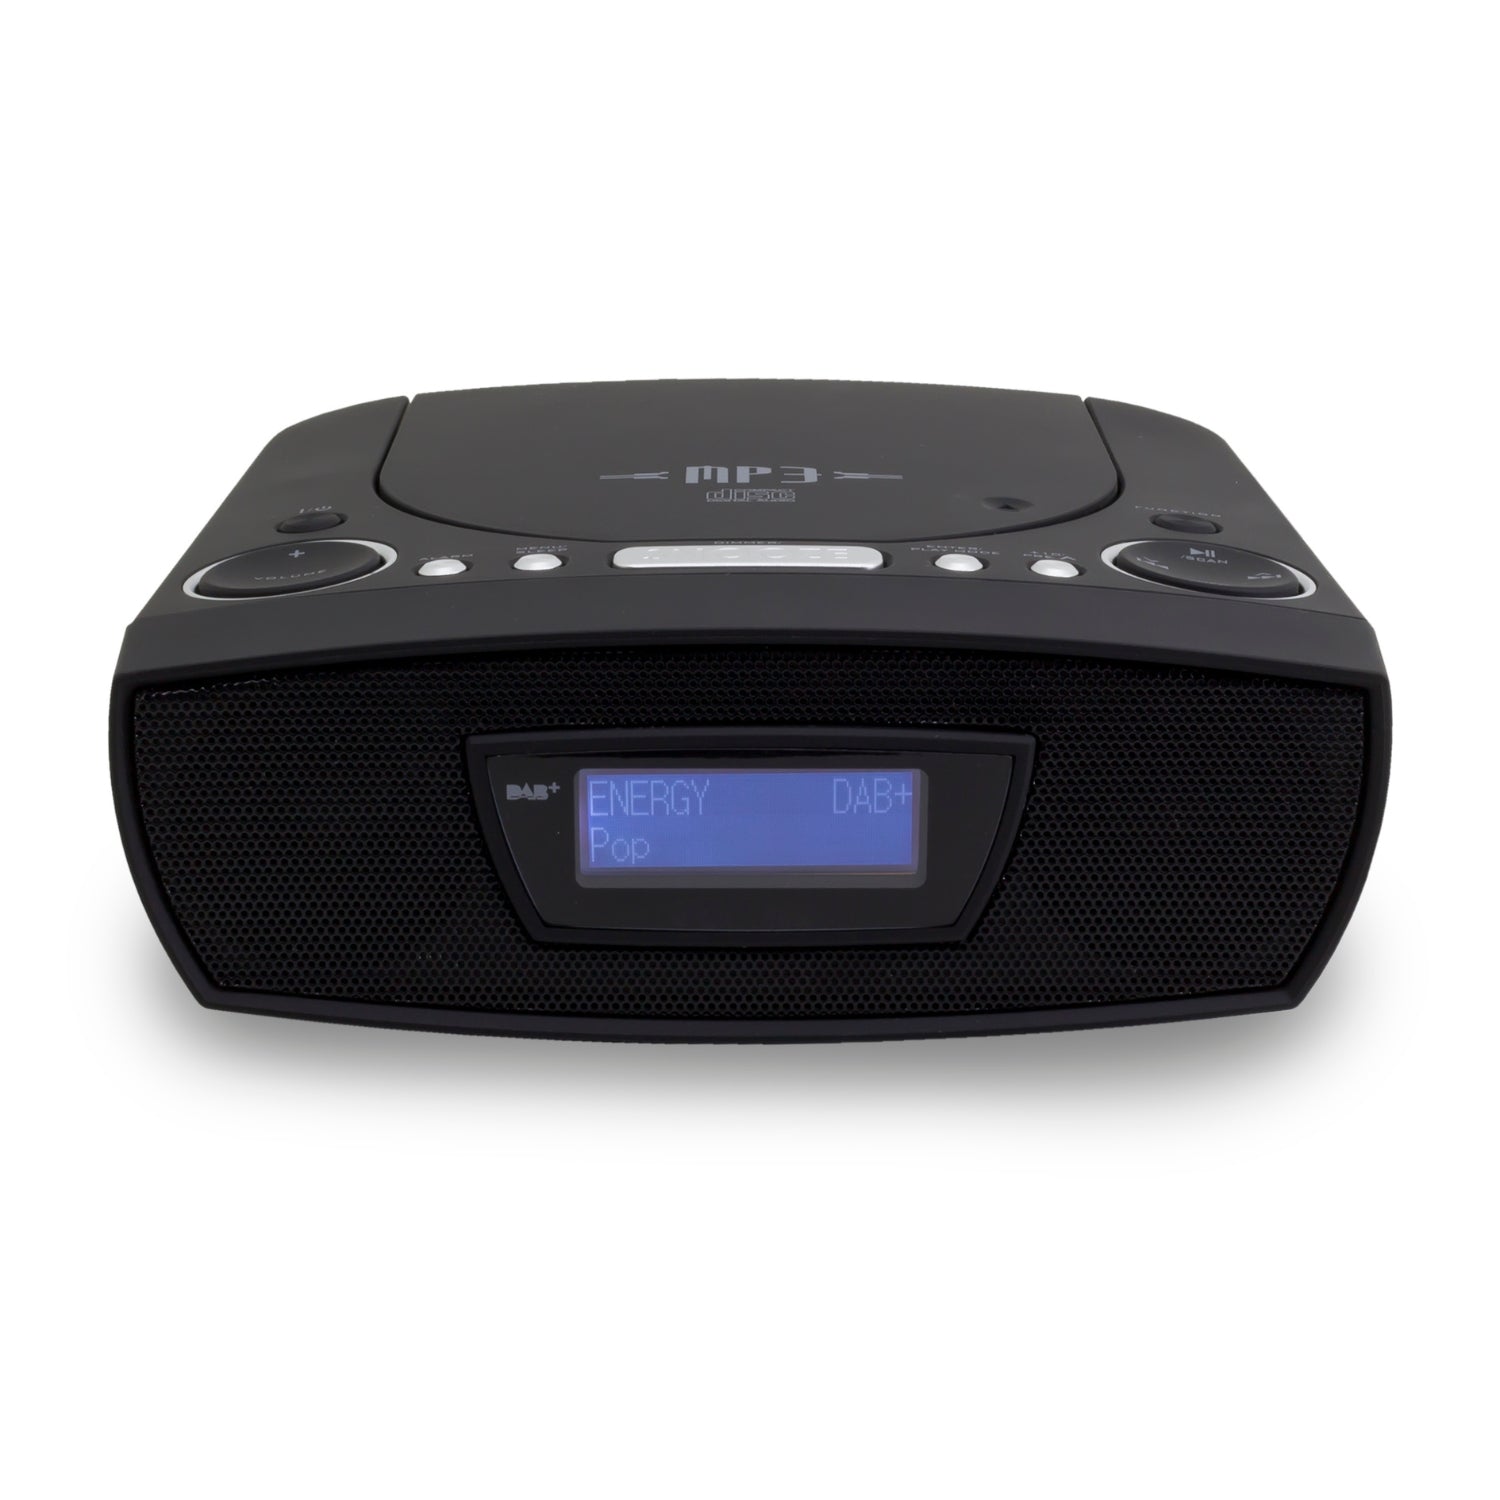 Soundmaster URD480SW DAB+/FM digital clock radio with CD/MP3/Resume function and USB